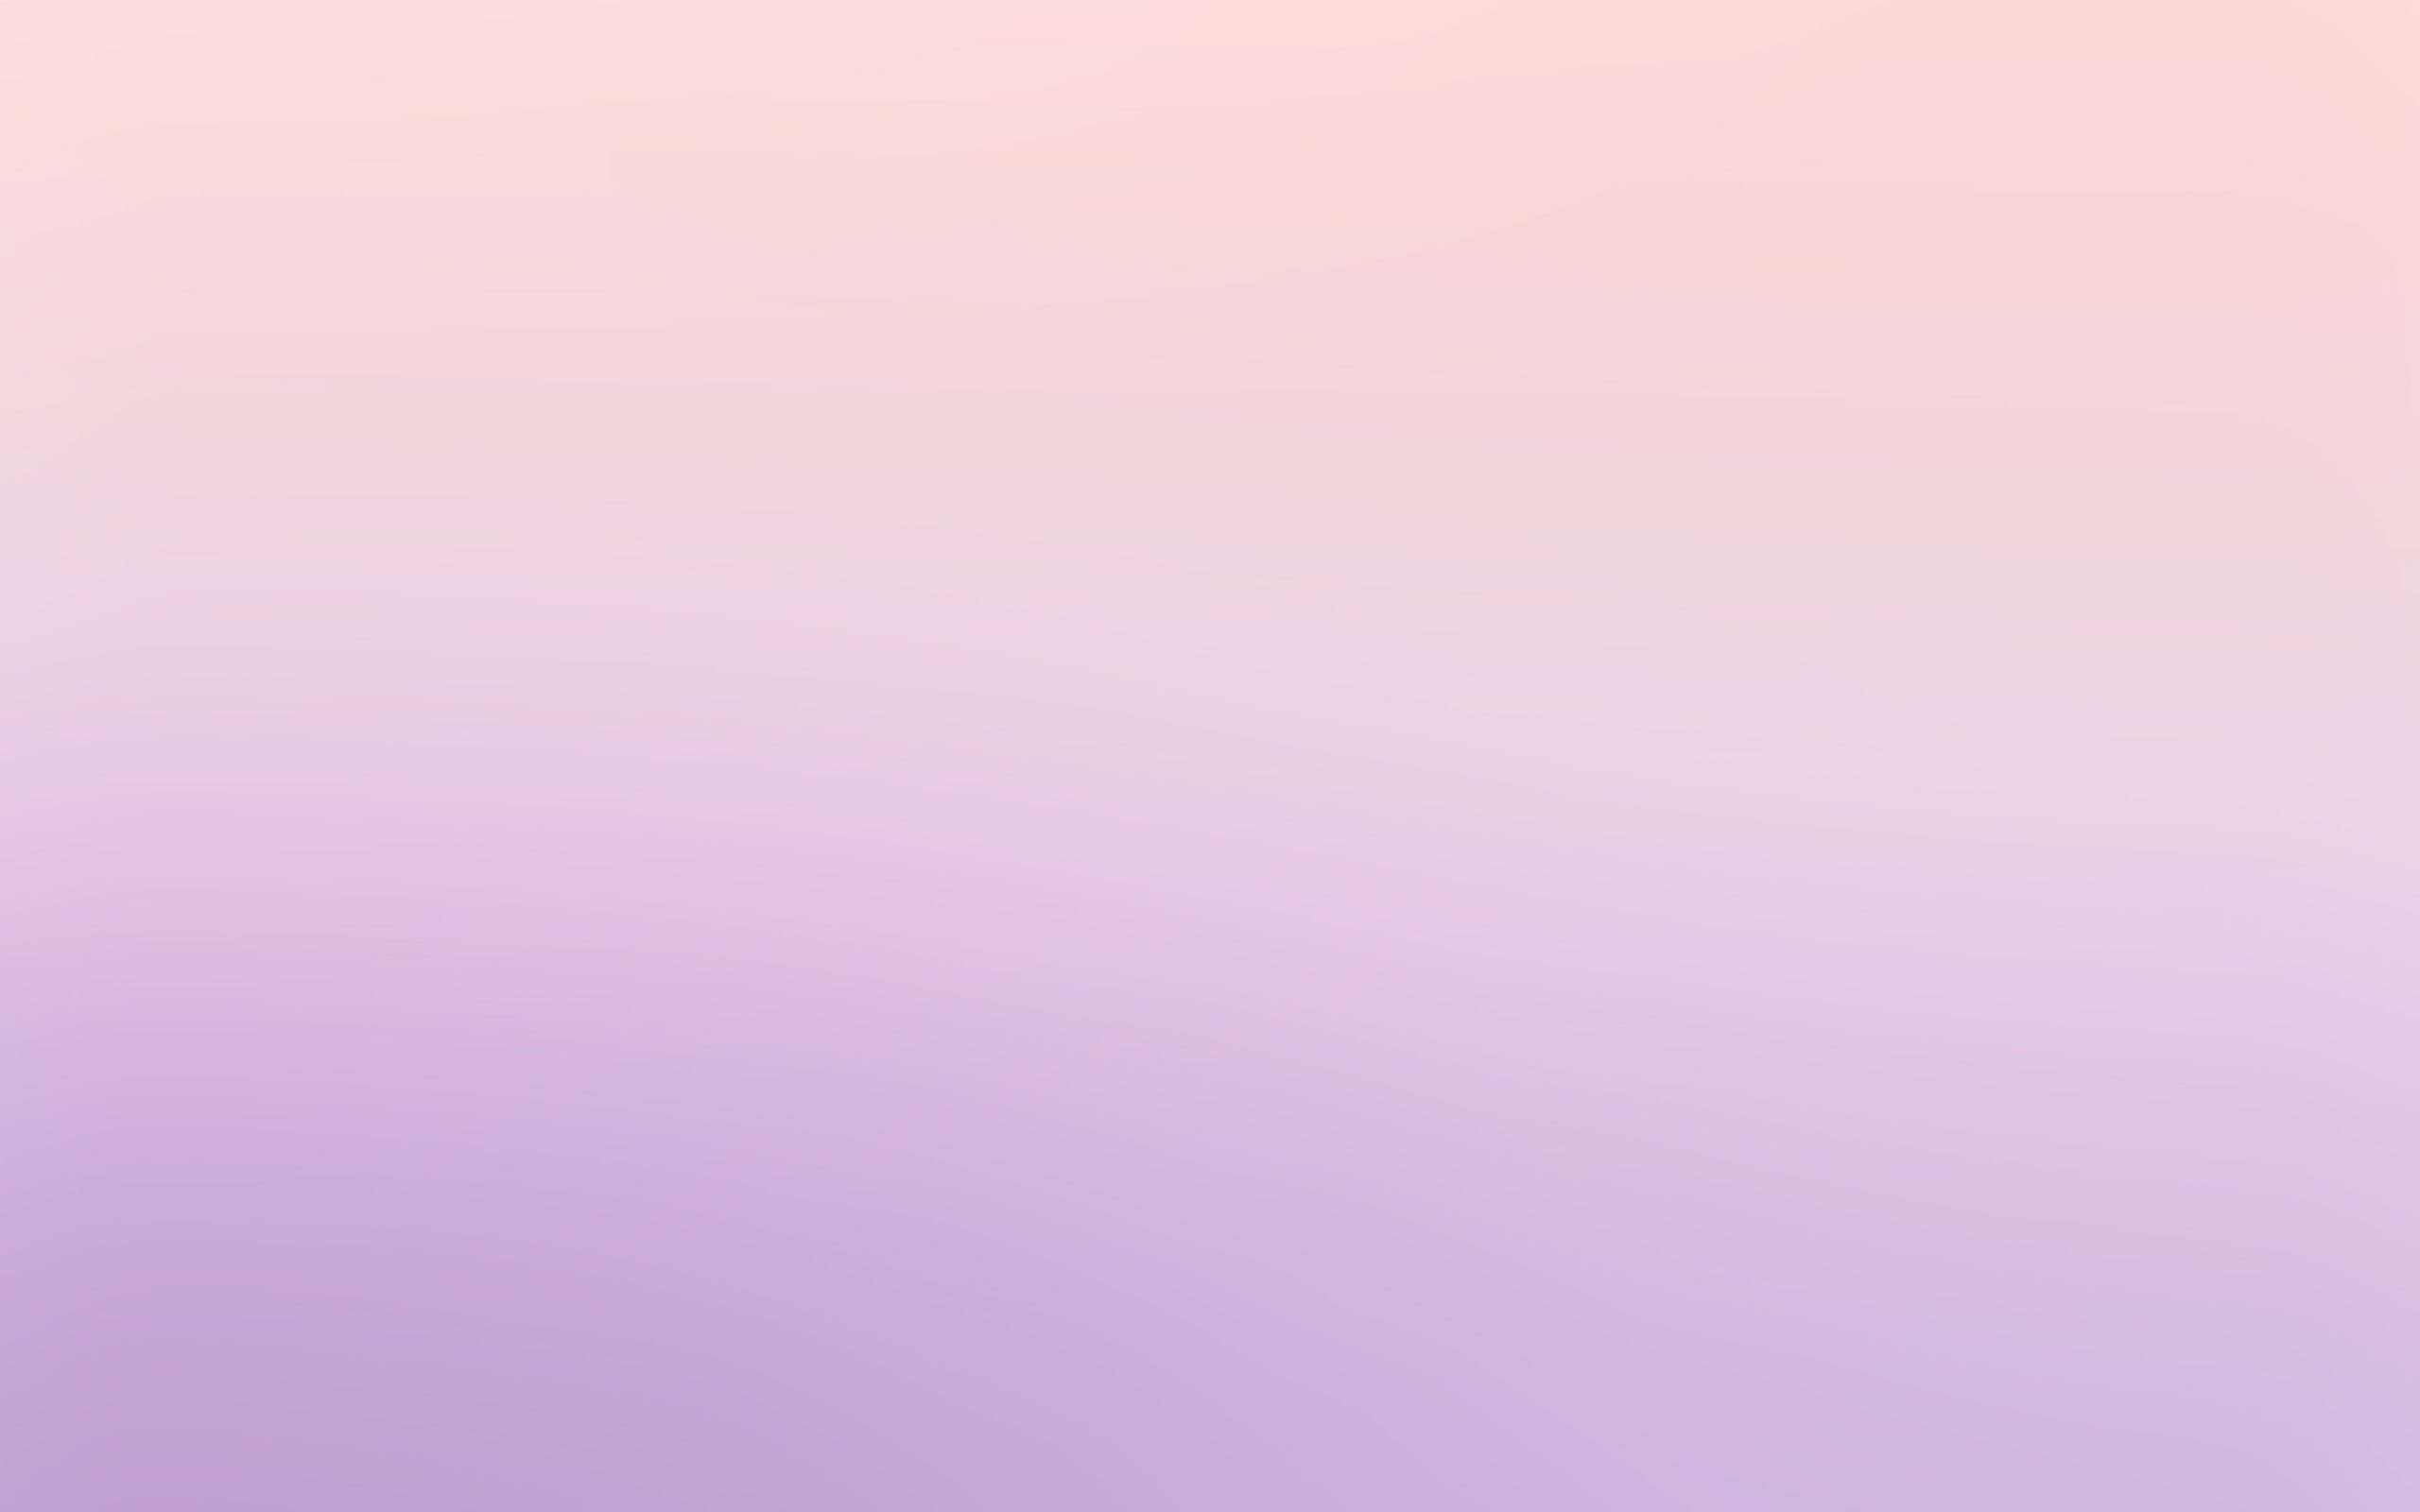 Pastel wallpaper purple blur gradation pink color backgrounds full frame